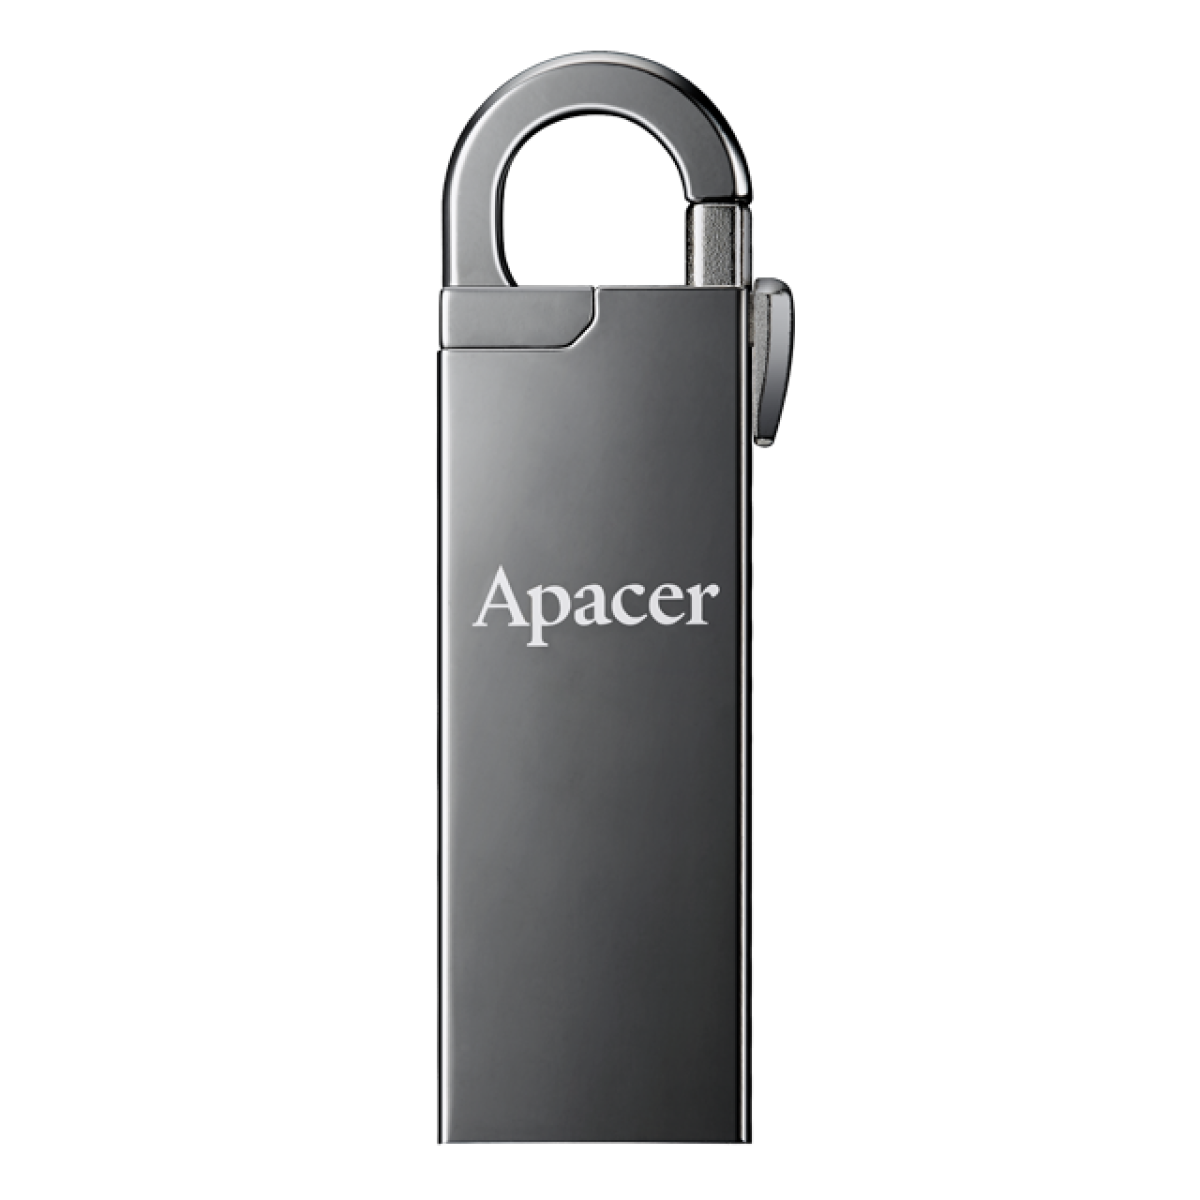 Apacer AH15A USB 3.1 Gen 1 / Flash Drive 32GB